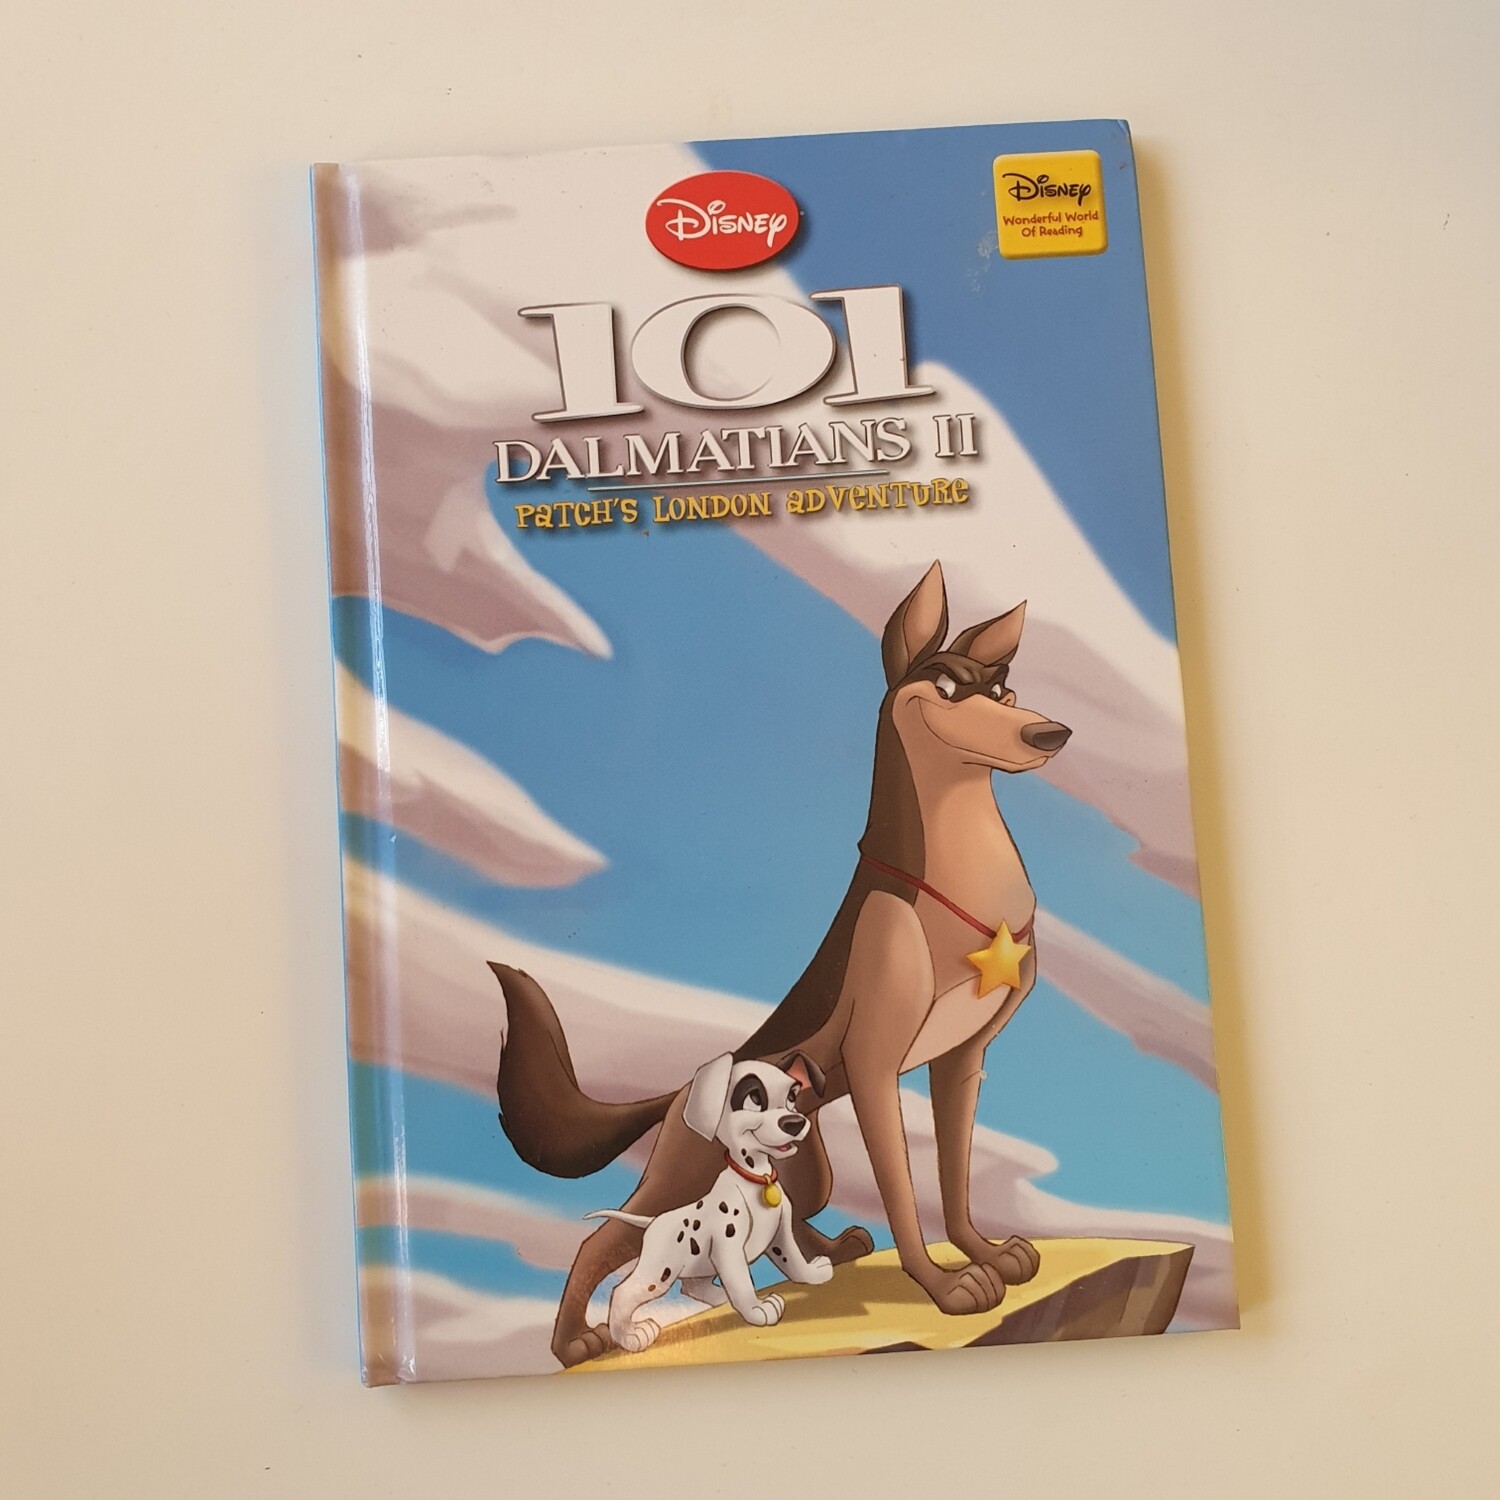 101 Dalmatians II - Patch's London Adventure Notebook